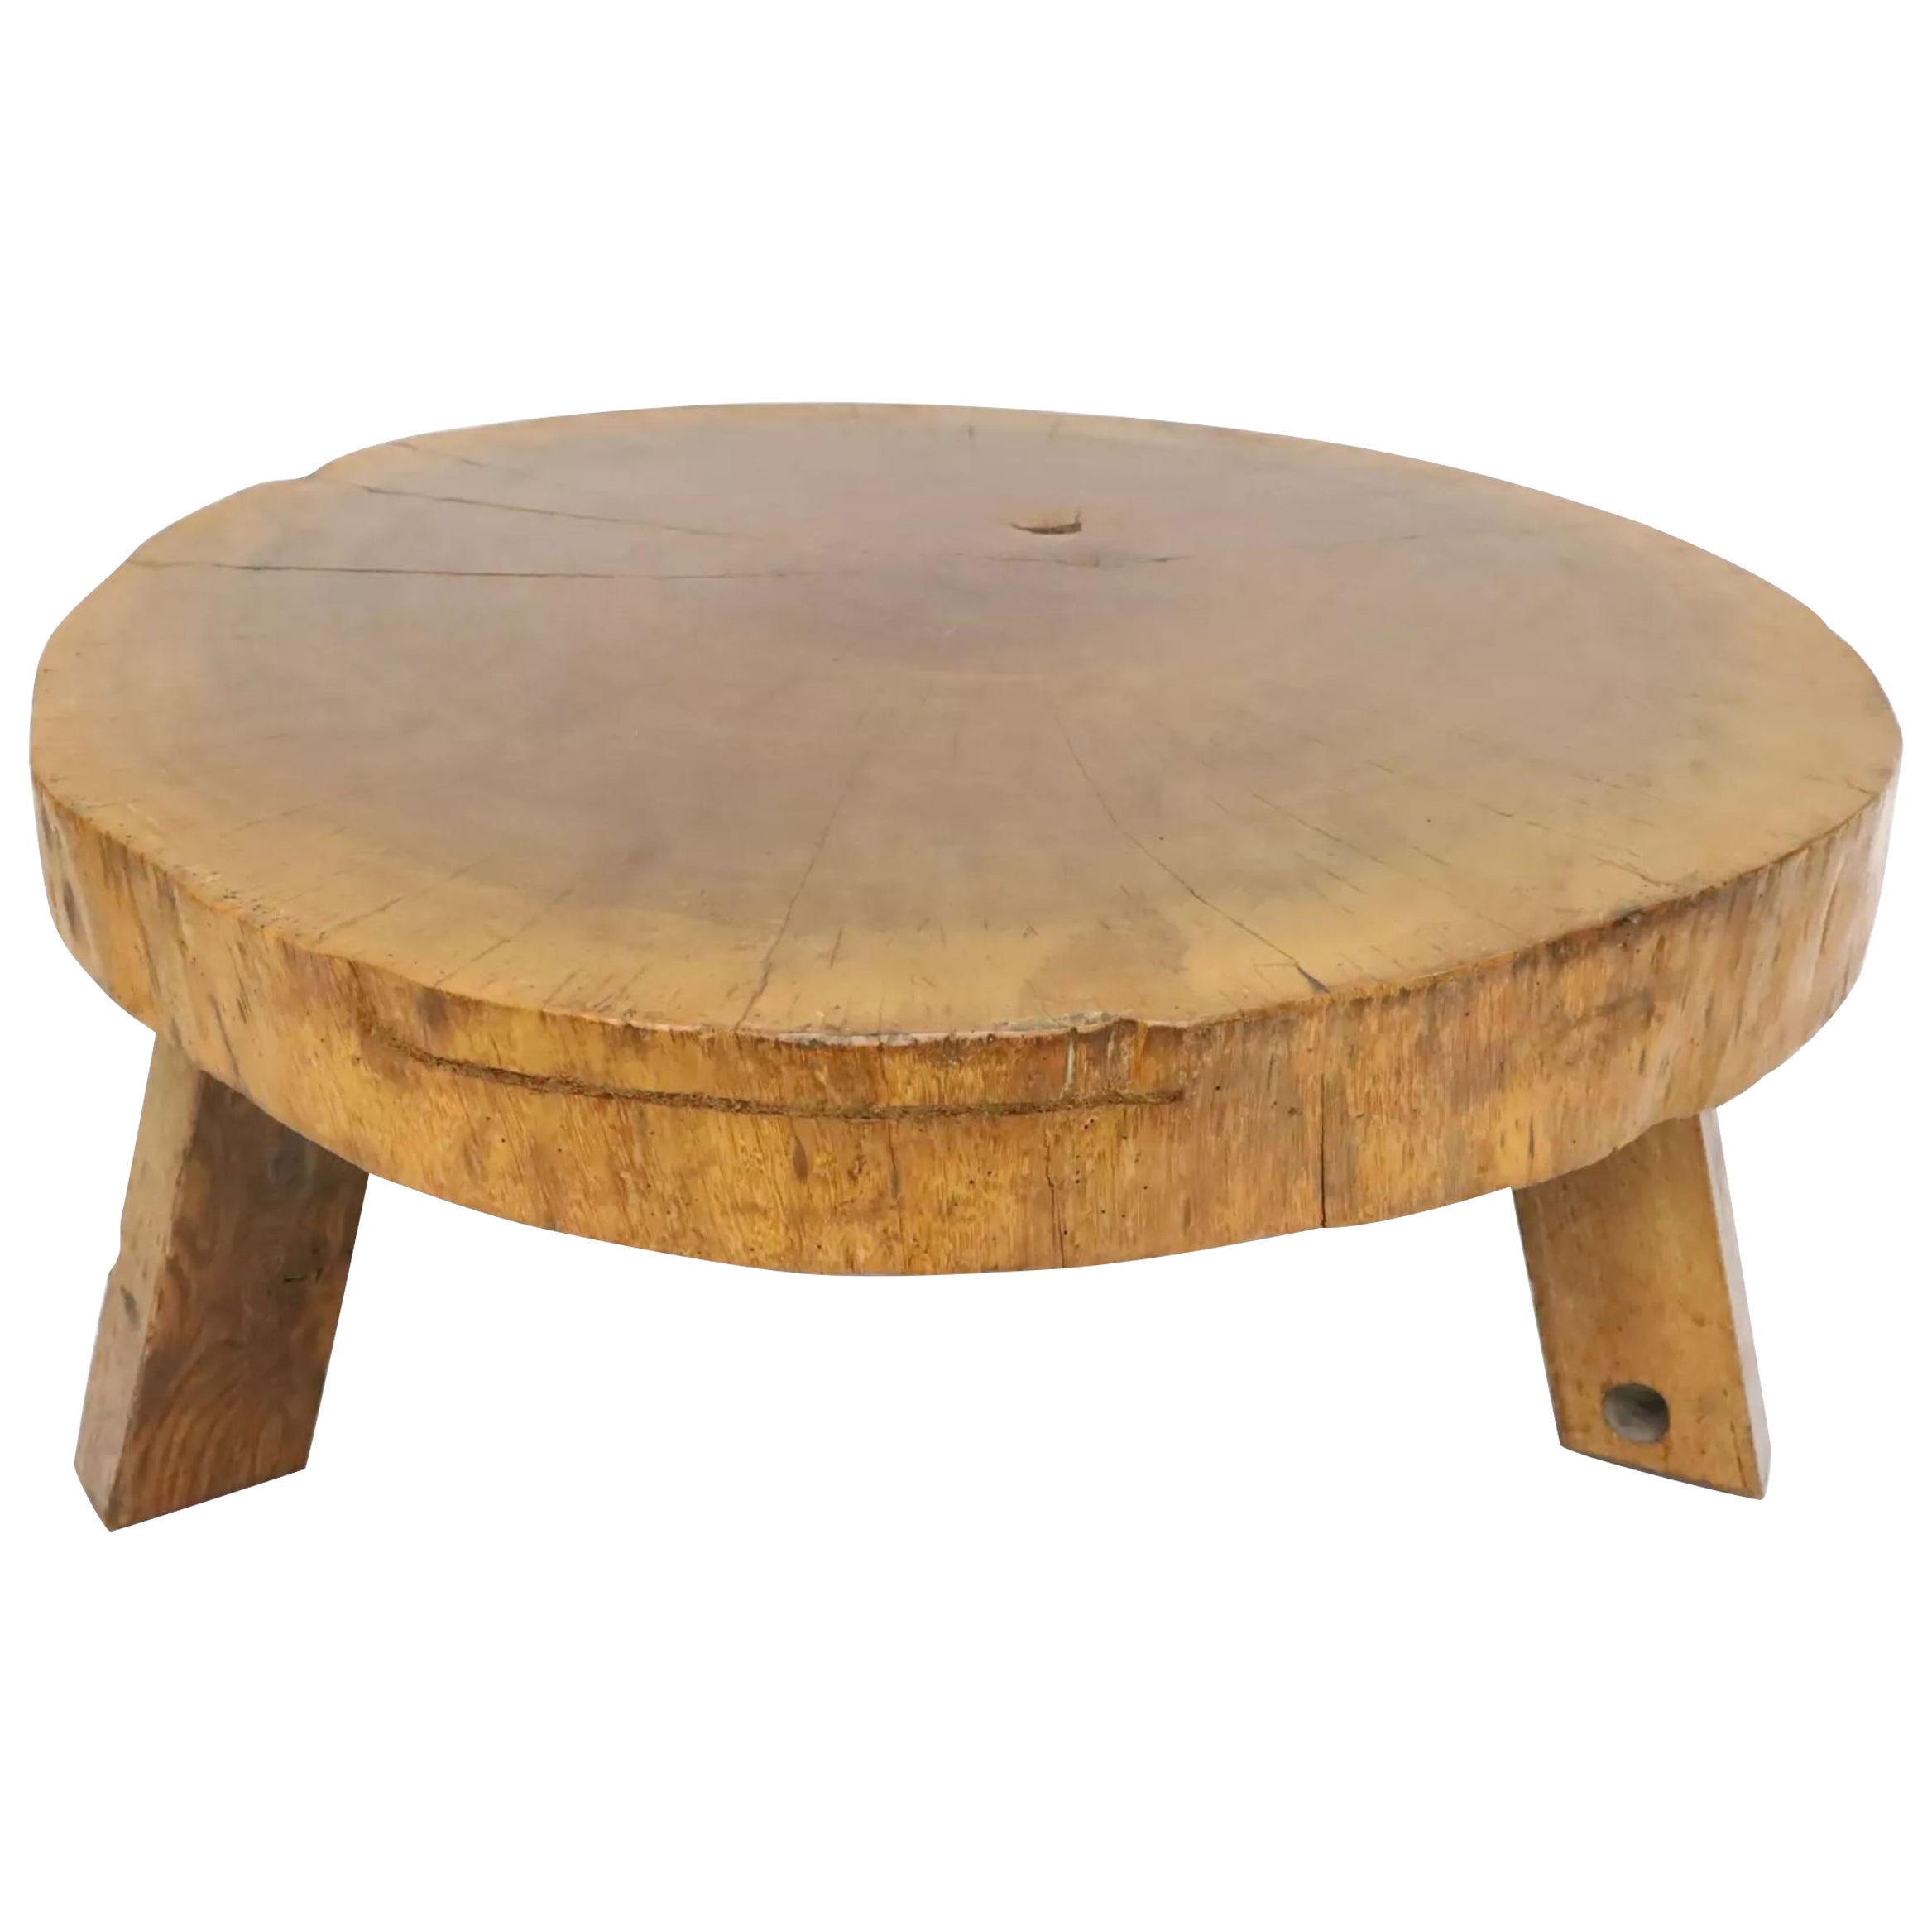 Table basse en bois comme Perriand, Chapo, Jeanneret, base tripode Wabi-Sabi 1940 en vente